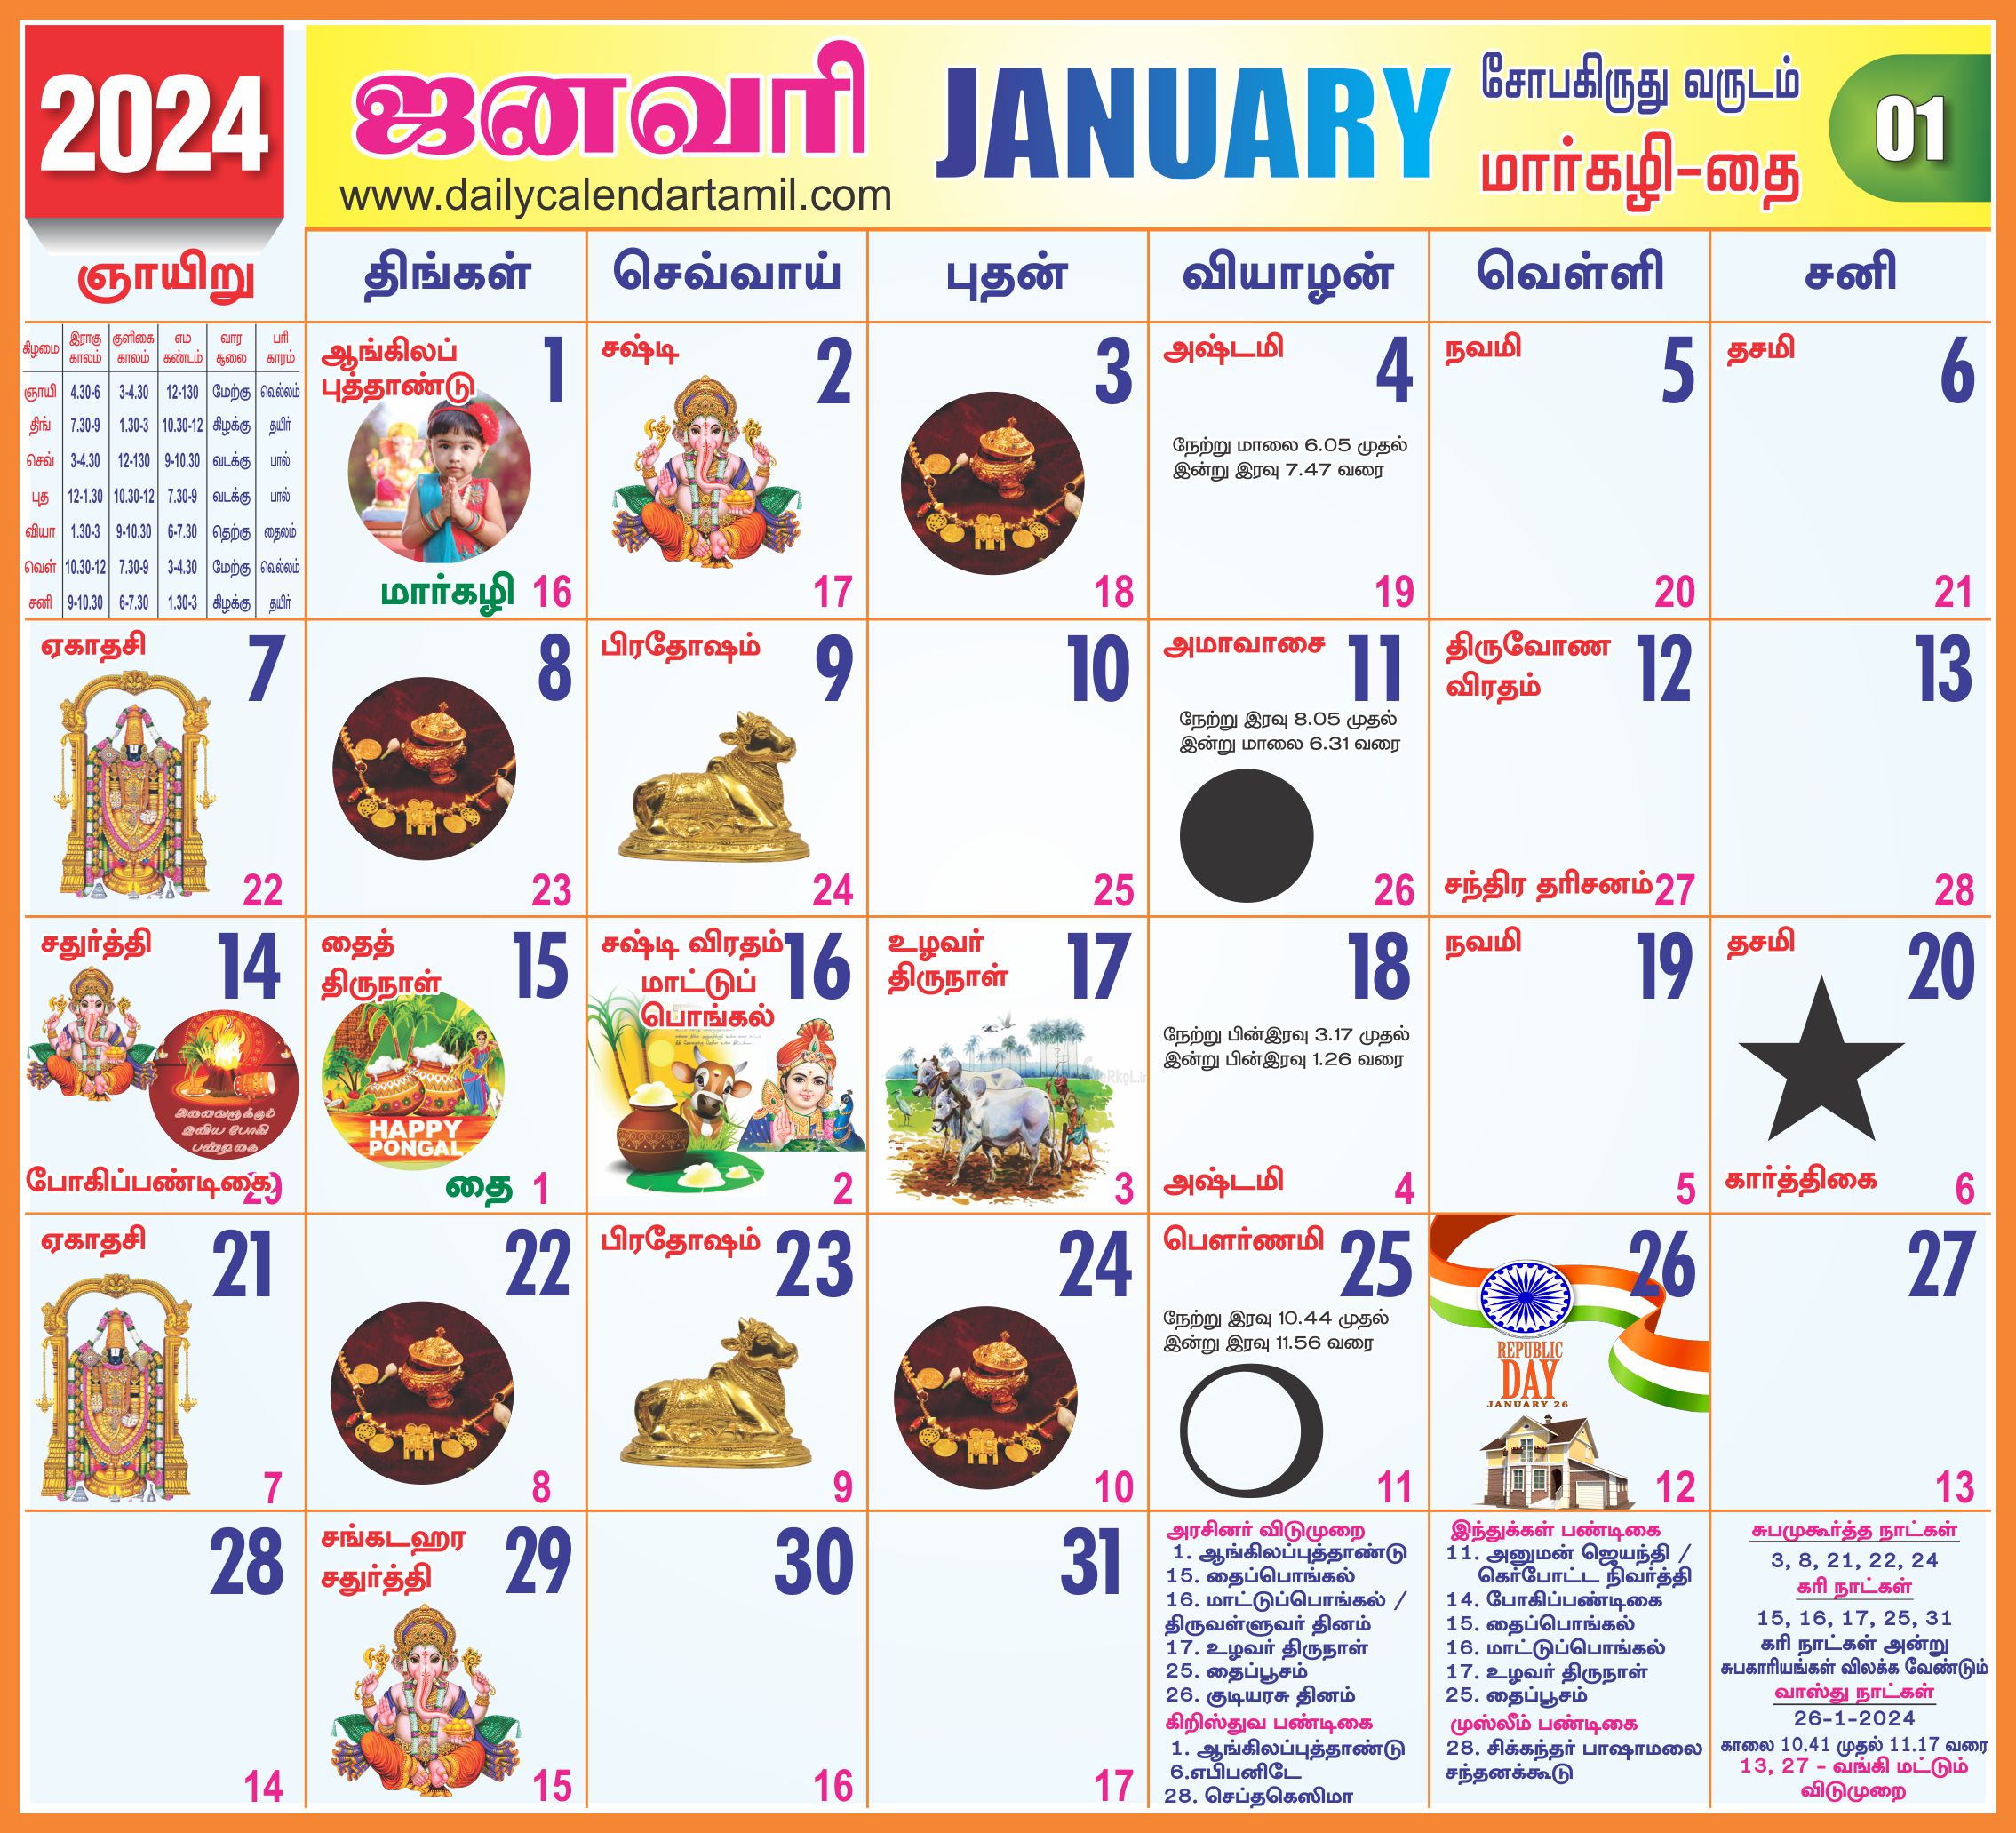 Tamil Calendar Monthly 2022 Tamil Calendar January 2022 | தமிழ் காலண்டர் 2022